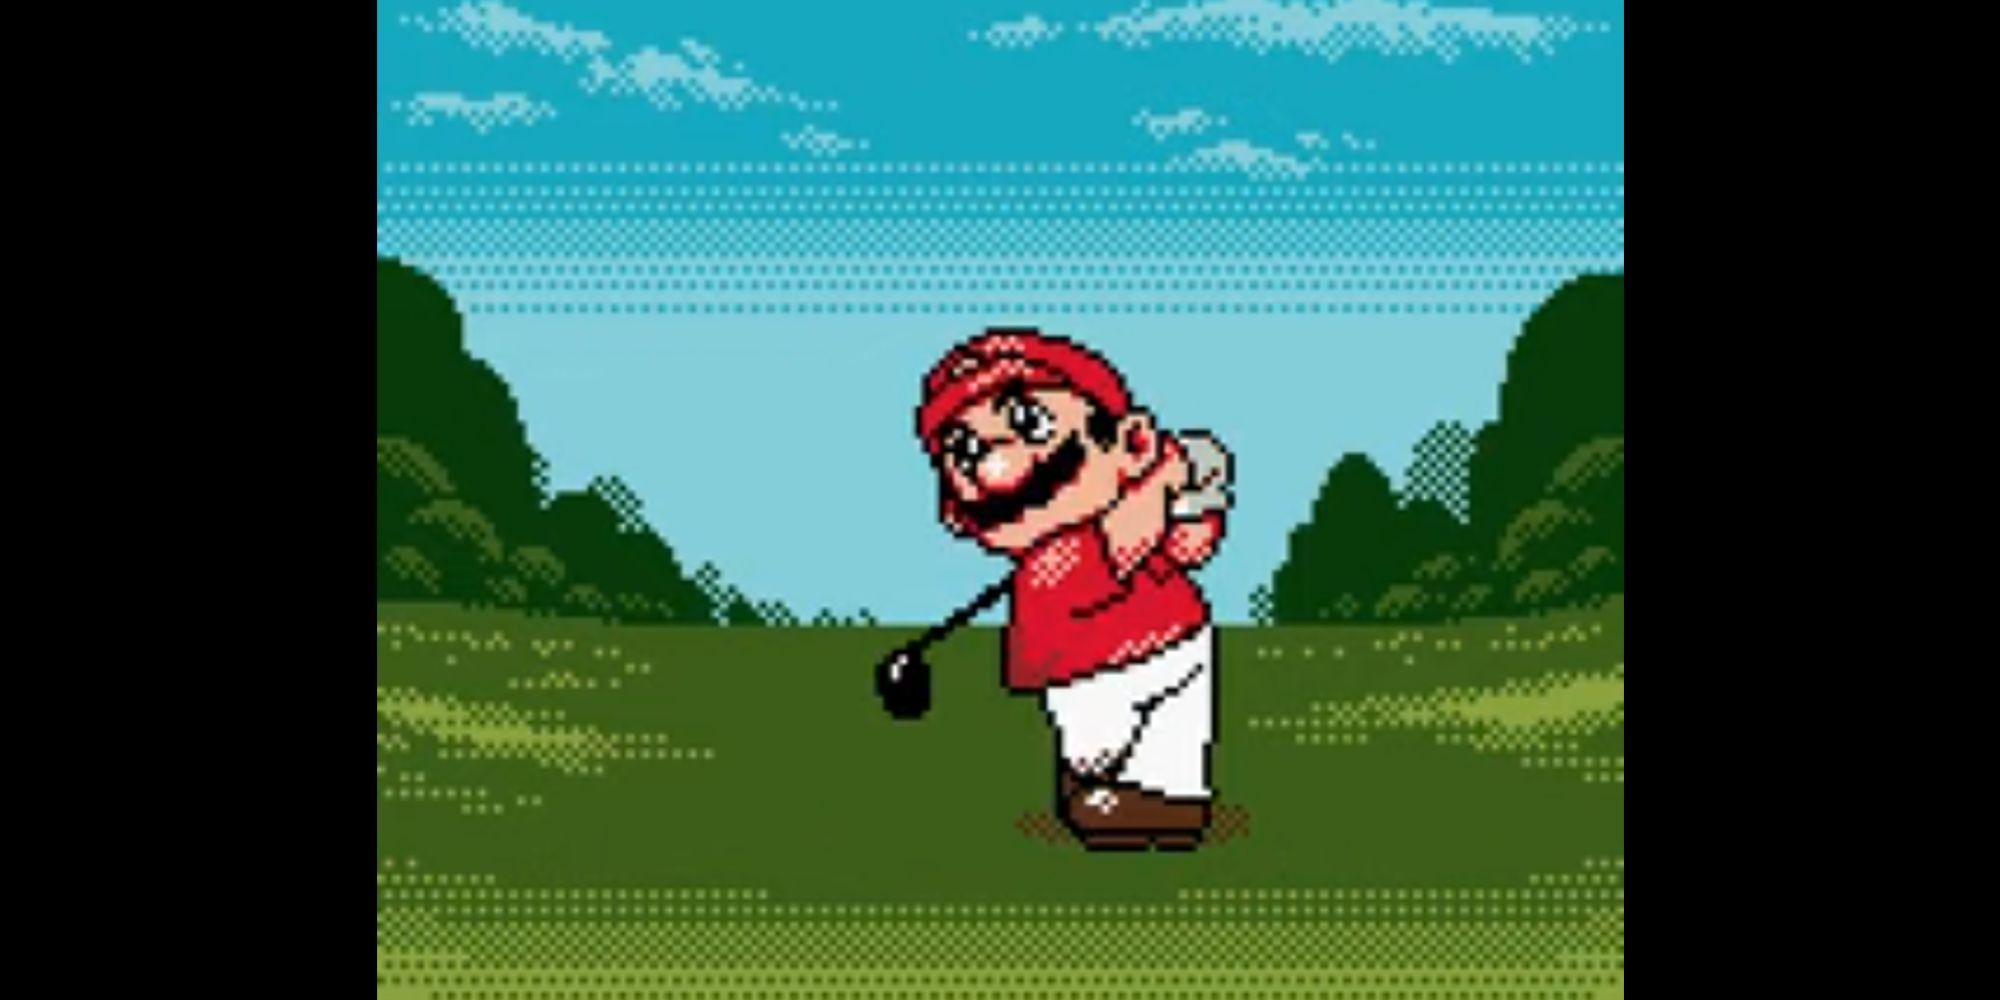 Mario swings a golf club on a green course